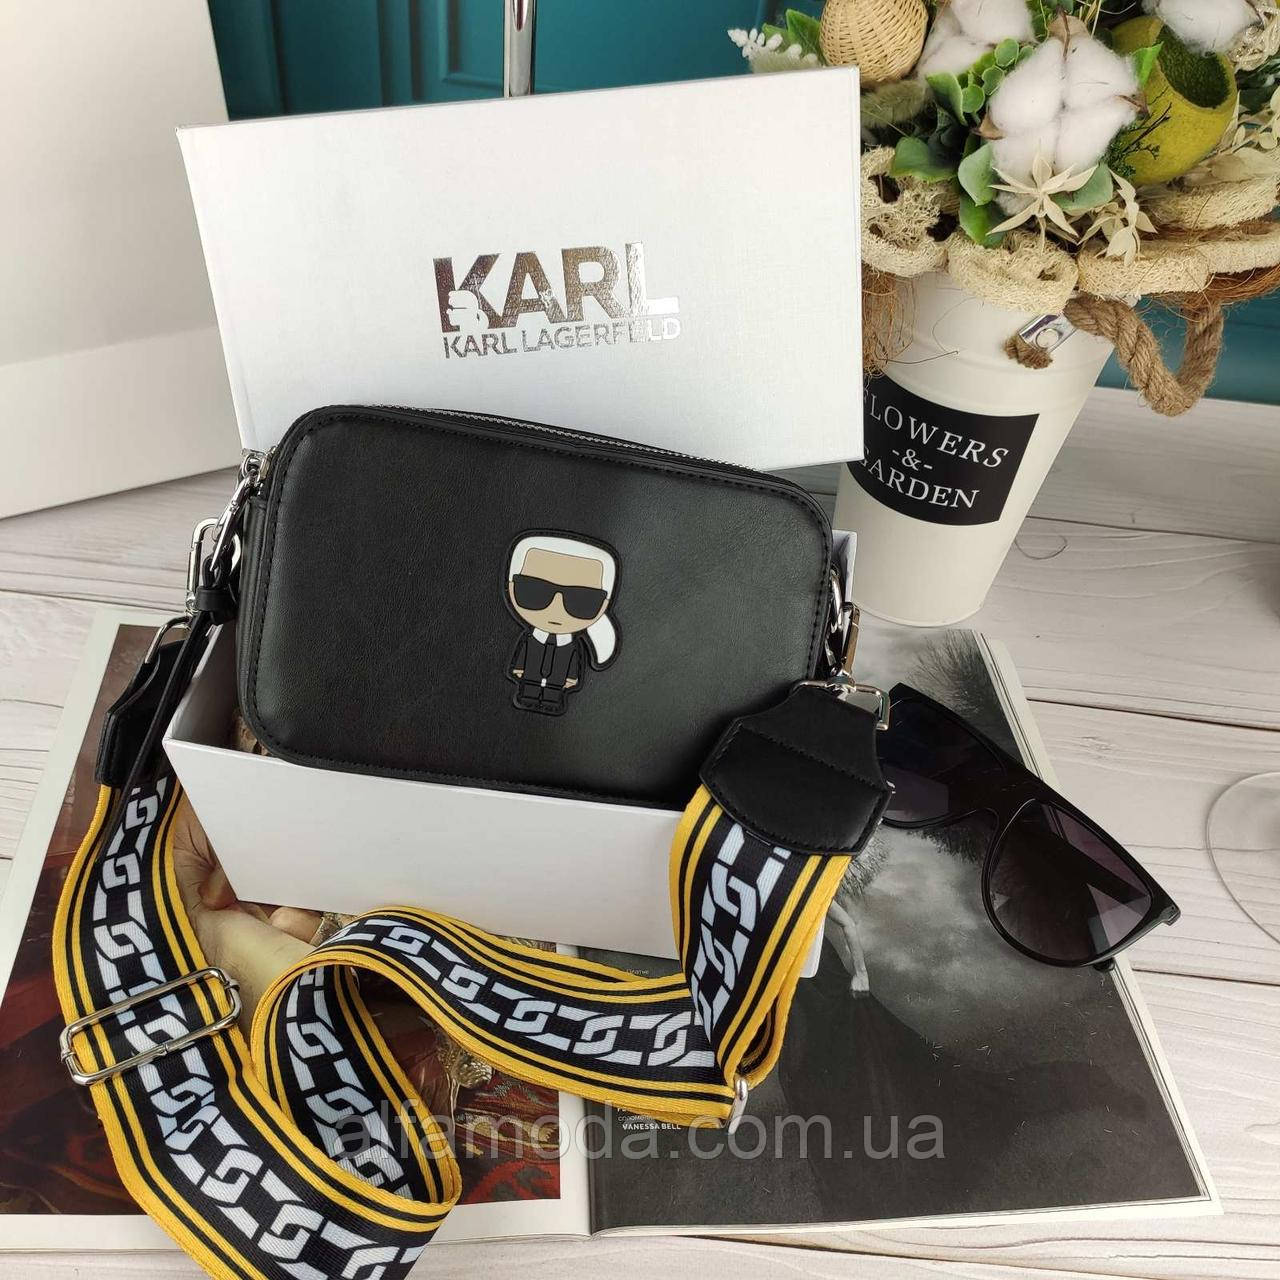 

Женская сумка Karl Lagerfeld Карл Лагерфельд В КОРОБКЕ, Черный